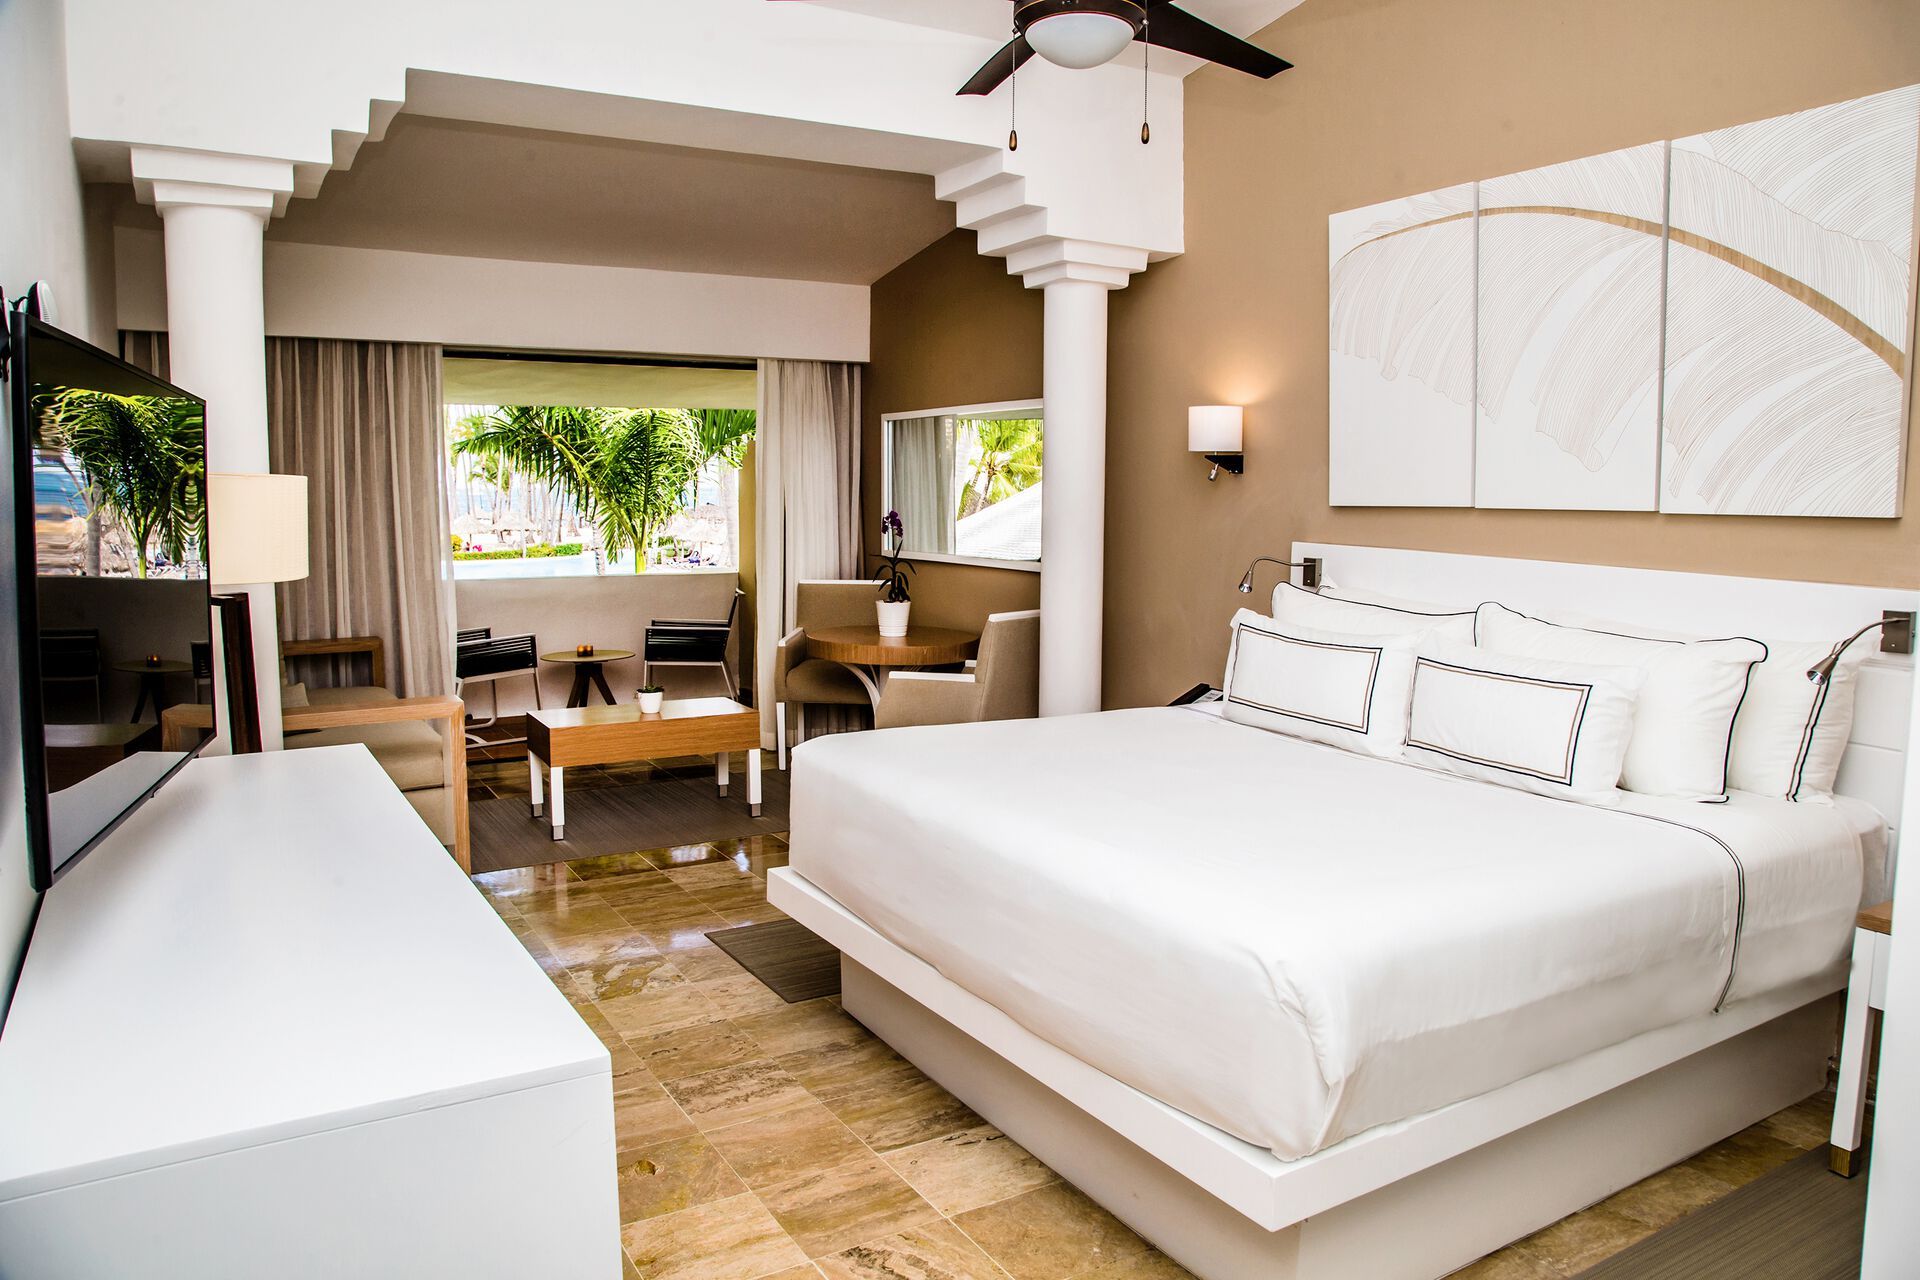 République Dominicaine - Punta Cana - Hôtel Melia Punta Cana Beach Resort 5* - Adult Only